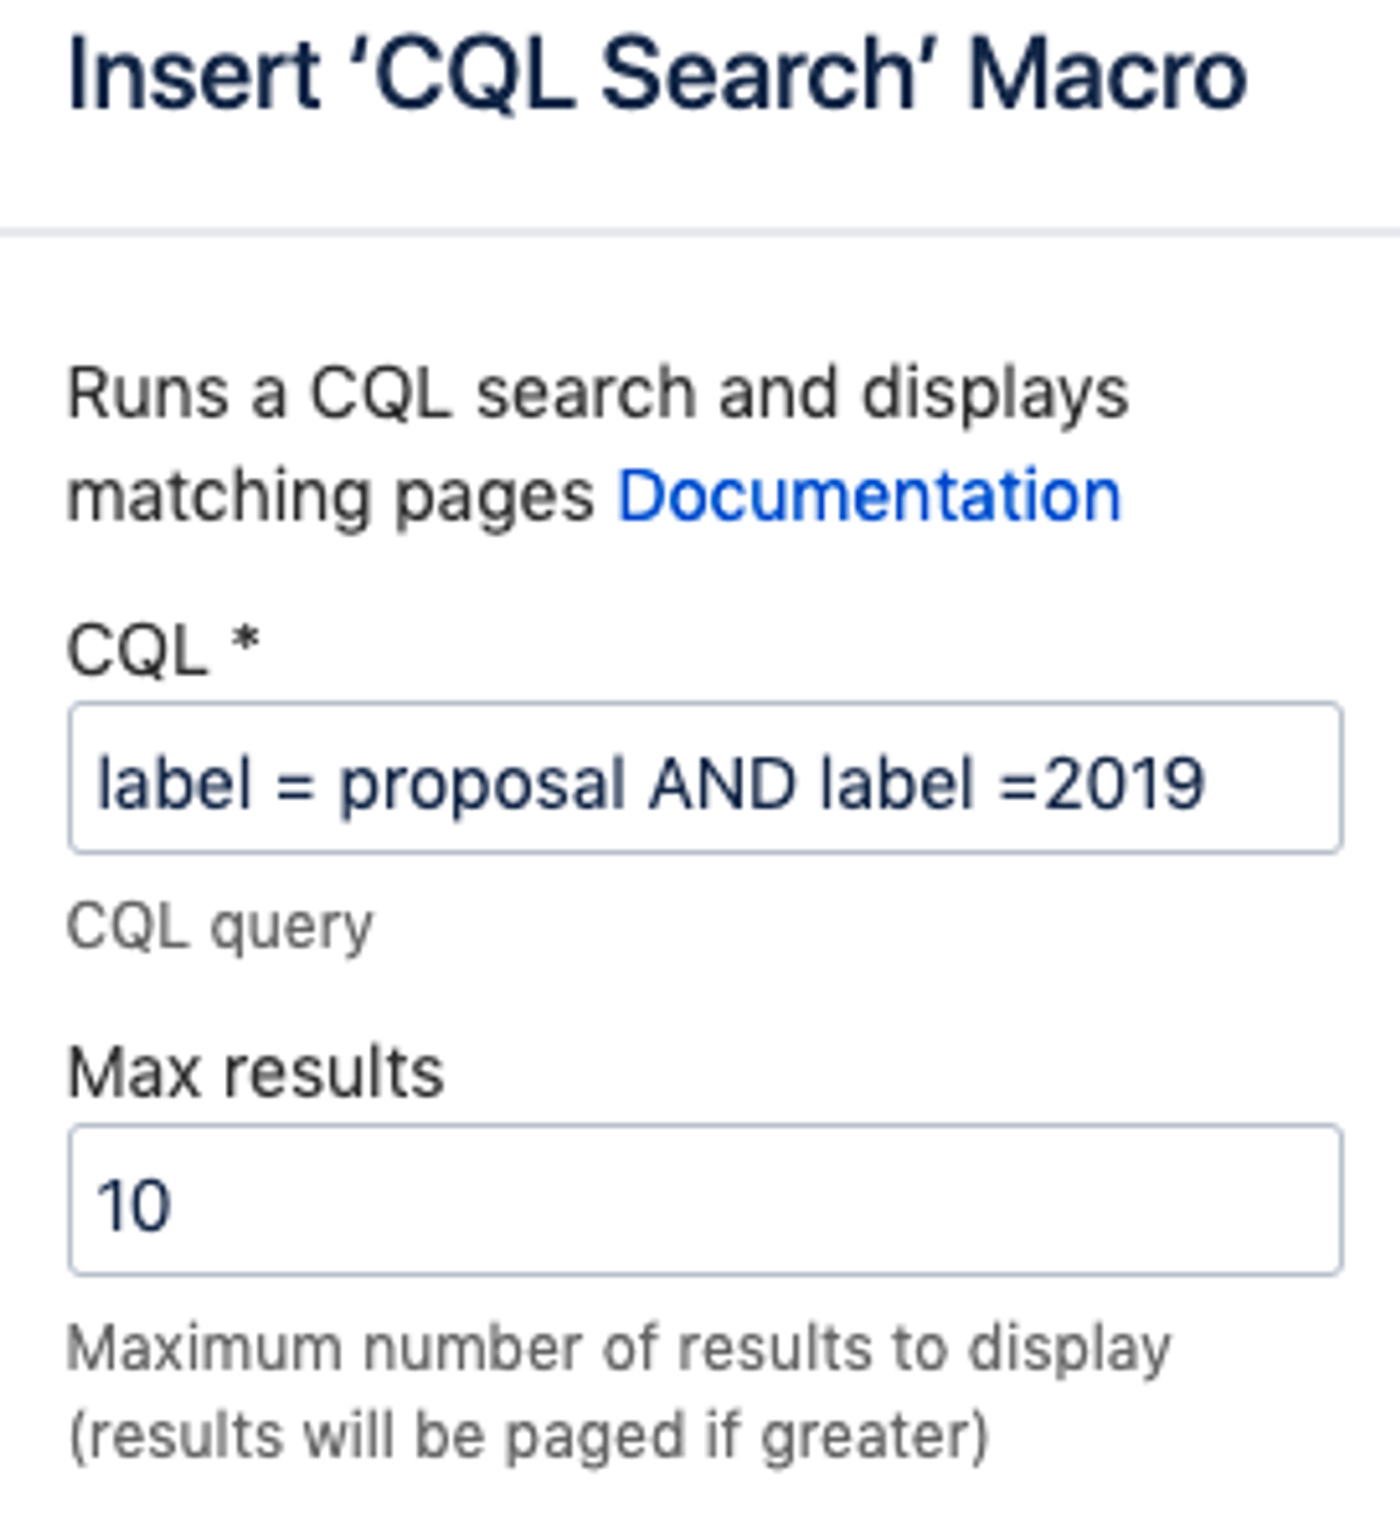 A screenshot of the insert CQL Search macro